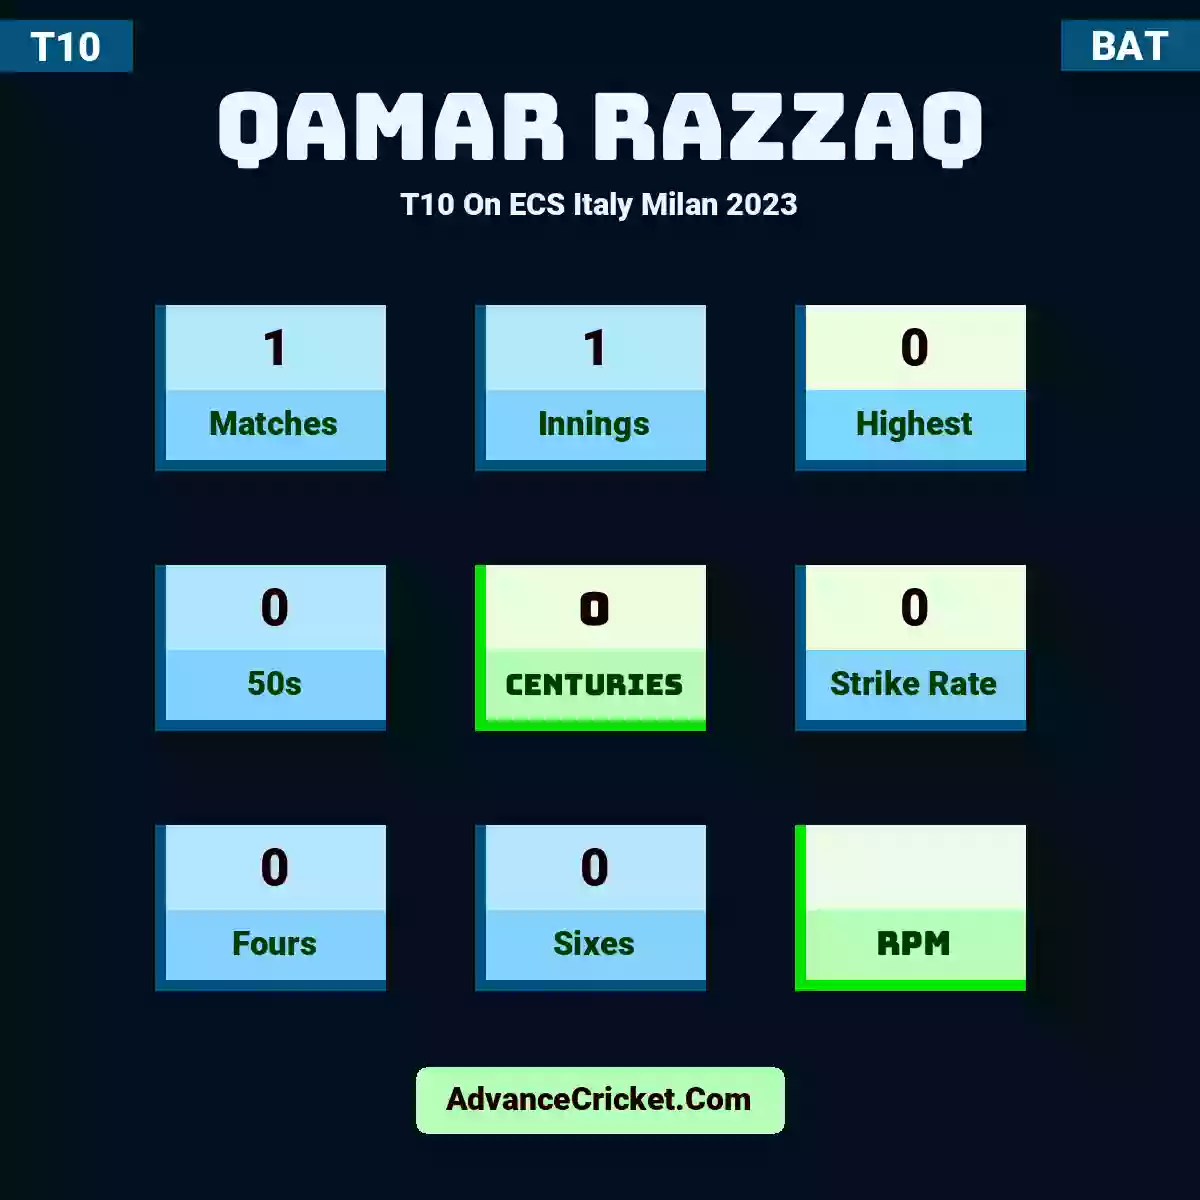 Qamar Razzaq T10  On ECS Italy Milan 2023, Qamar Razzaq played 1 matches, scored 0 runs as highest, 0 half-centuries, and 0 centuries, with a strike rate of 0. Q.Razzaq hit 0 fours and 0 sixes.